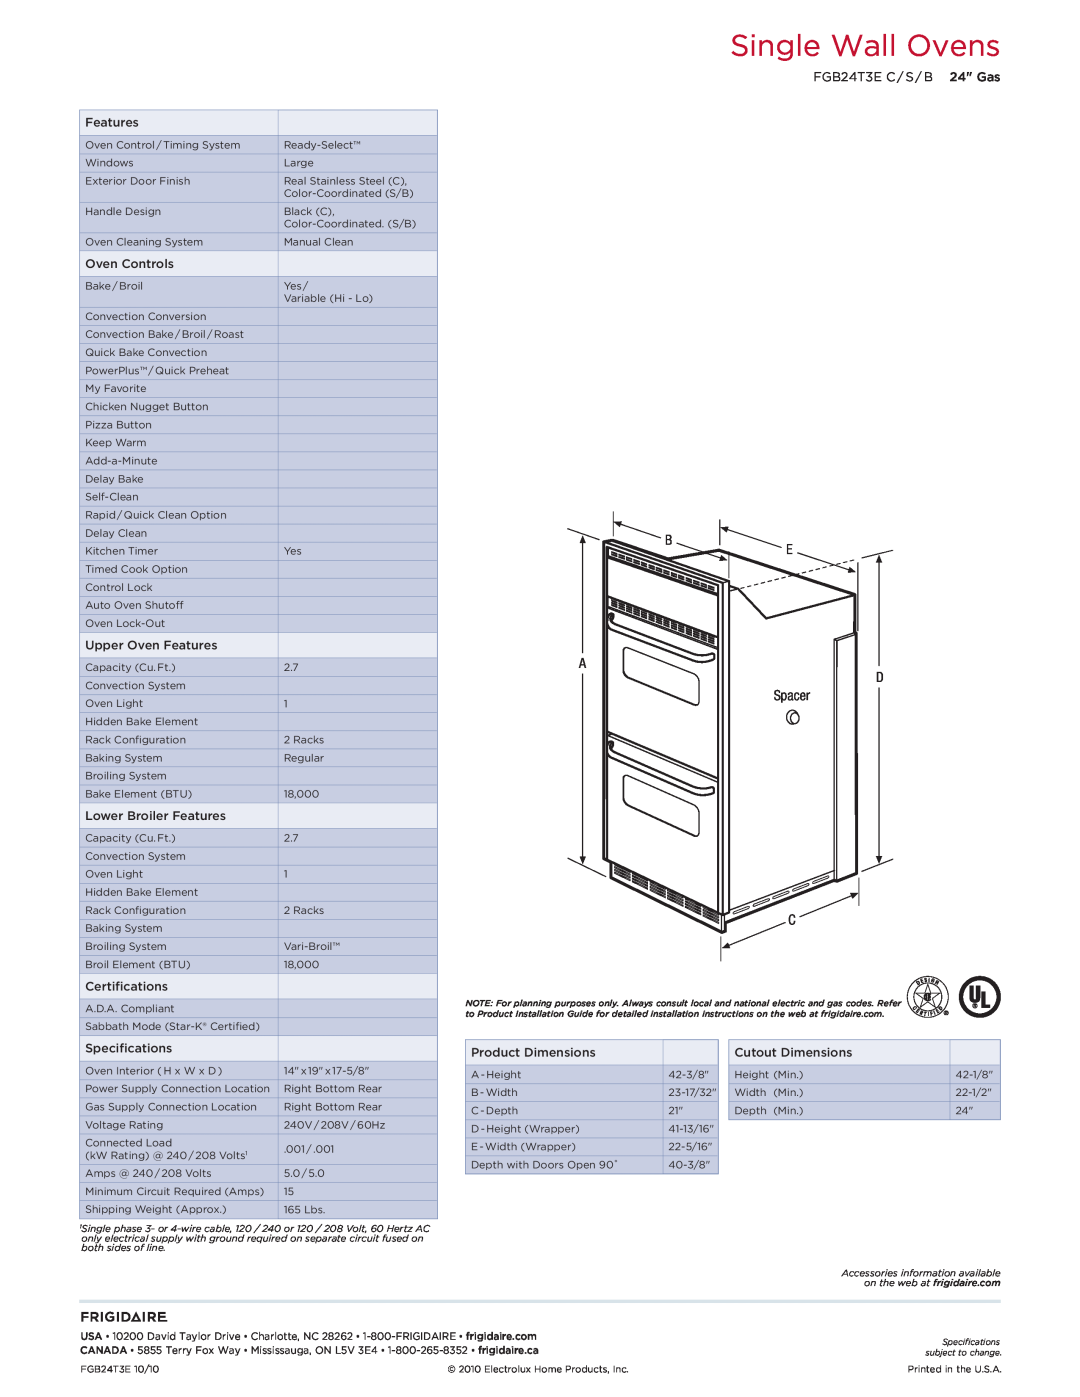 Frigidaire FGB24T3EC Single Wall Ovens, FGB24T3E C / S / B 24 Gas, Oven Controls, Upper Oven Features, Certifications 